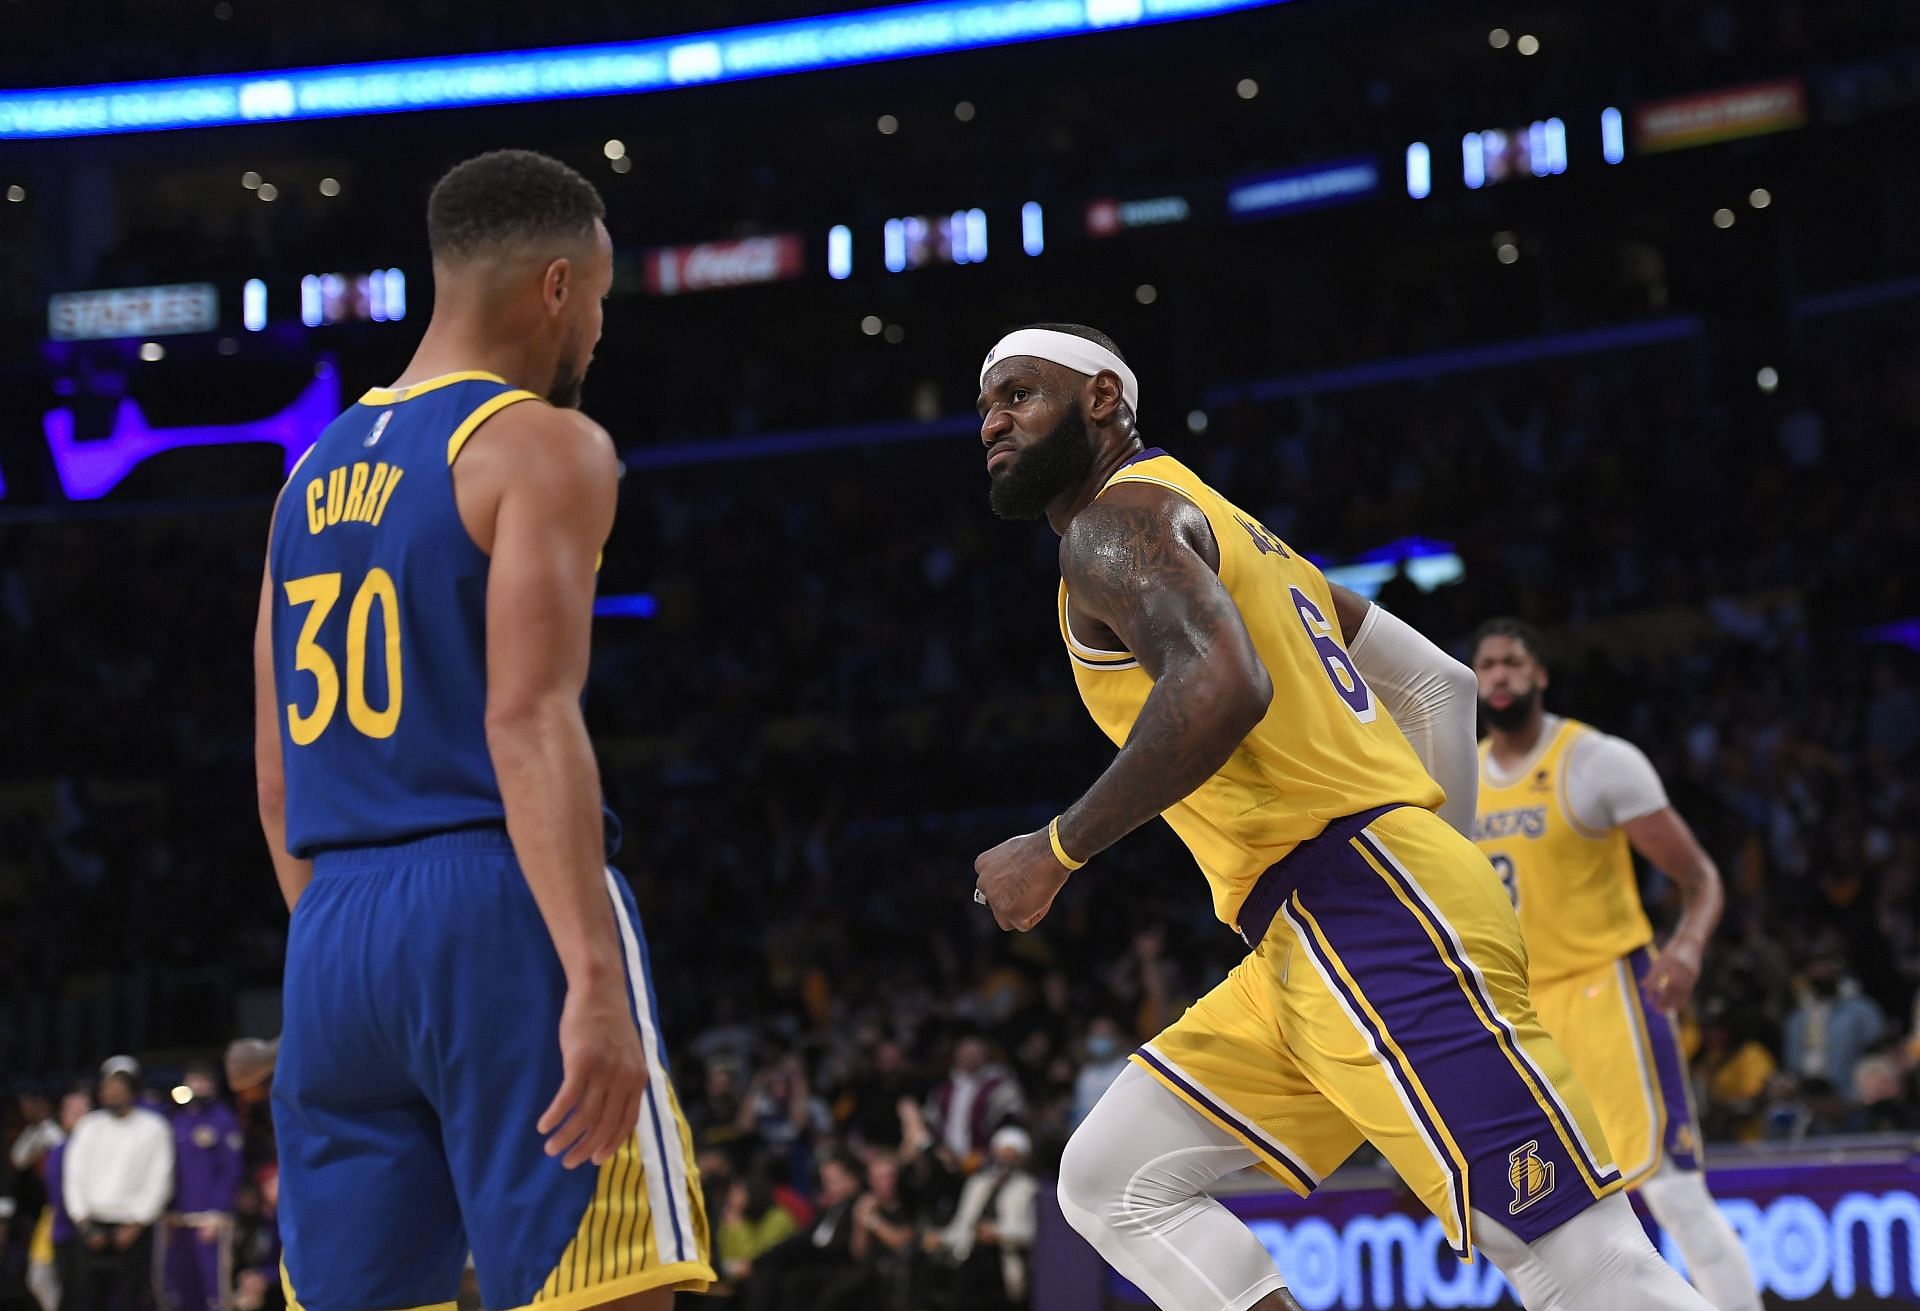 NBA superstars LeBron James and Steph Curry